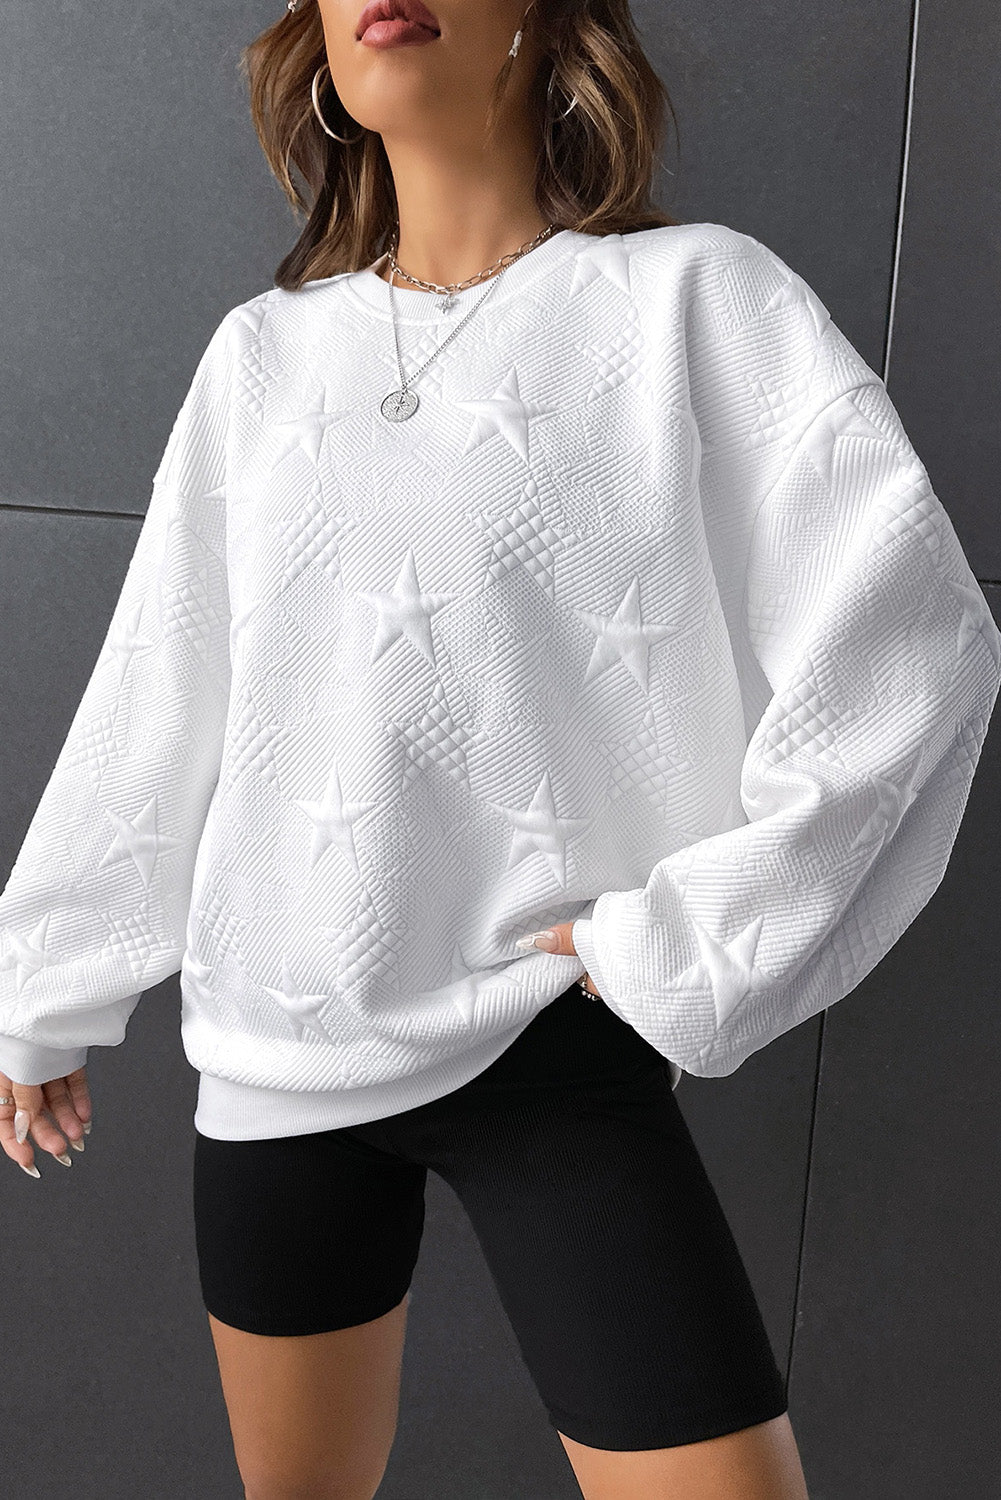 White Star Embossed Textured Drop Shoulder Sweatshirt